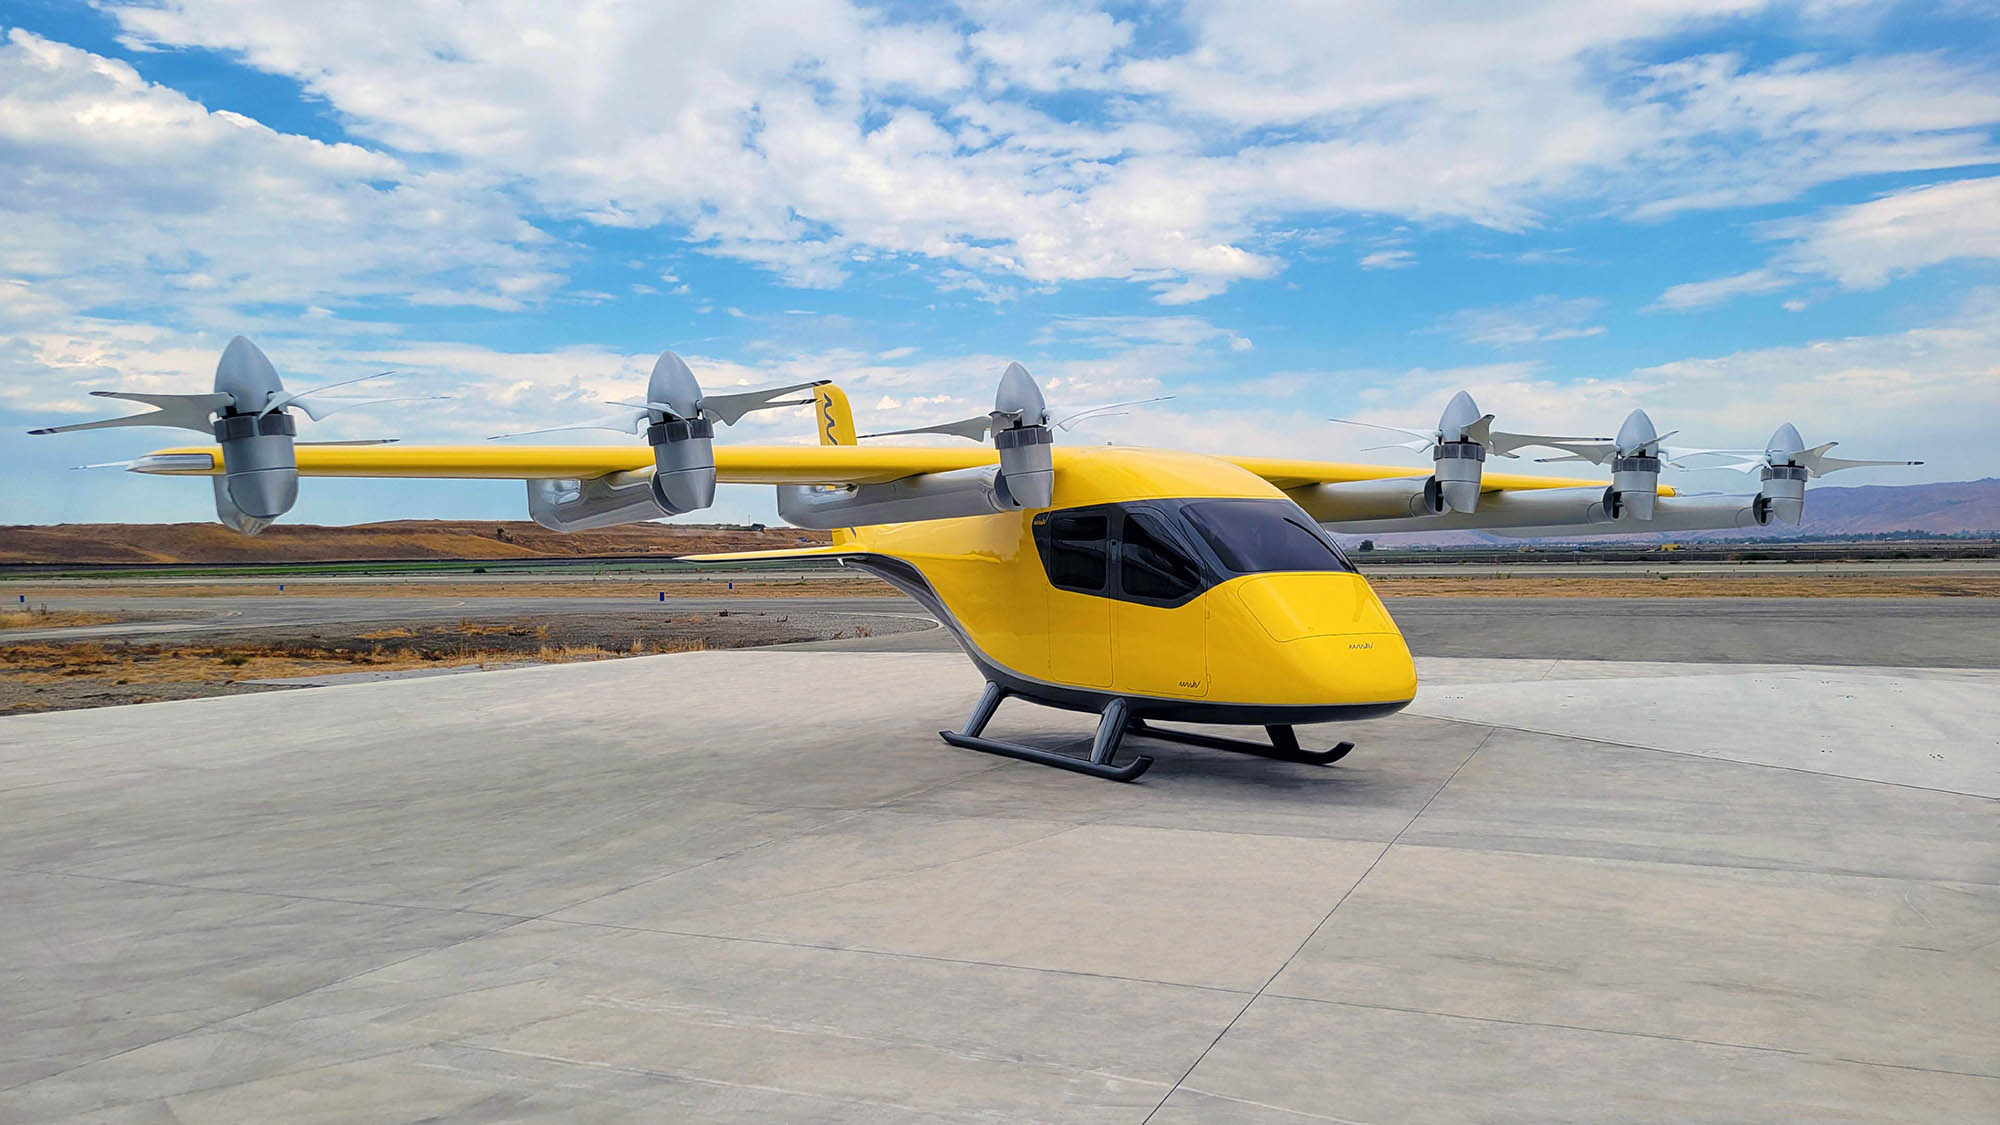 Wiskの最新空飛ぶタクシーは4席で自動飛行可能